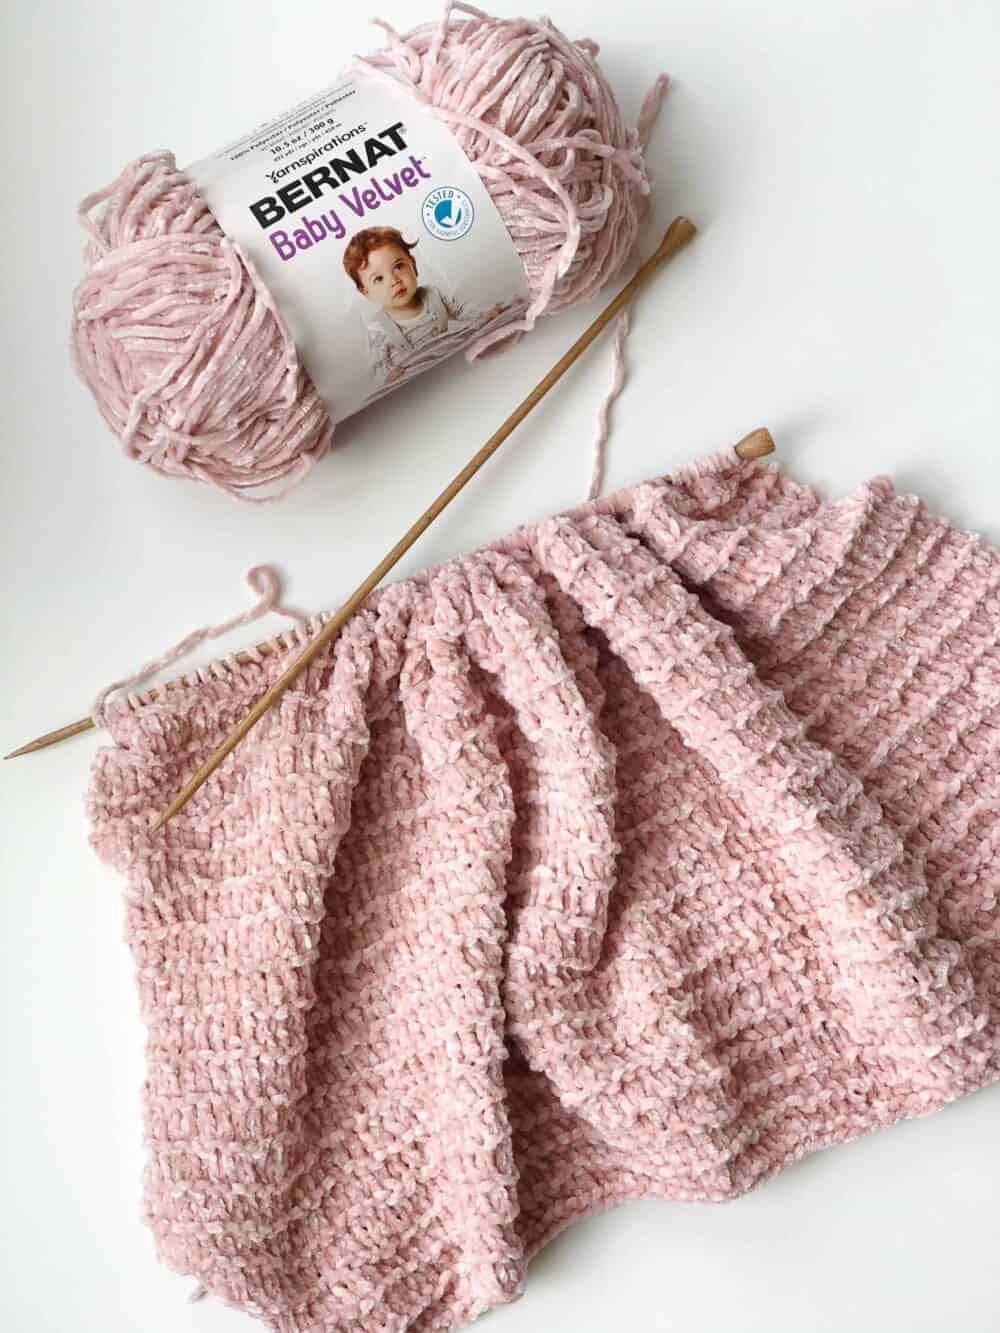 Free Blanket Knitting Patterns for 2020 - Knitting Bee